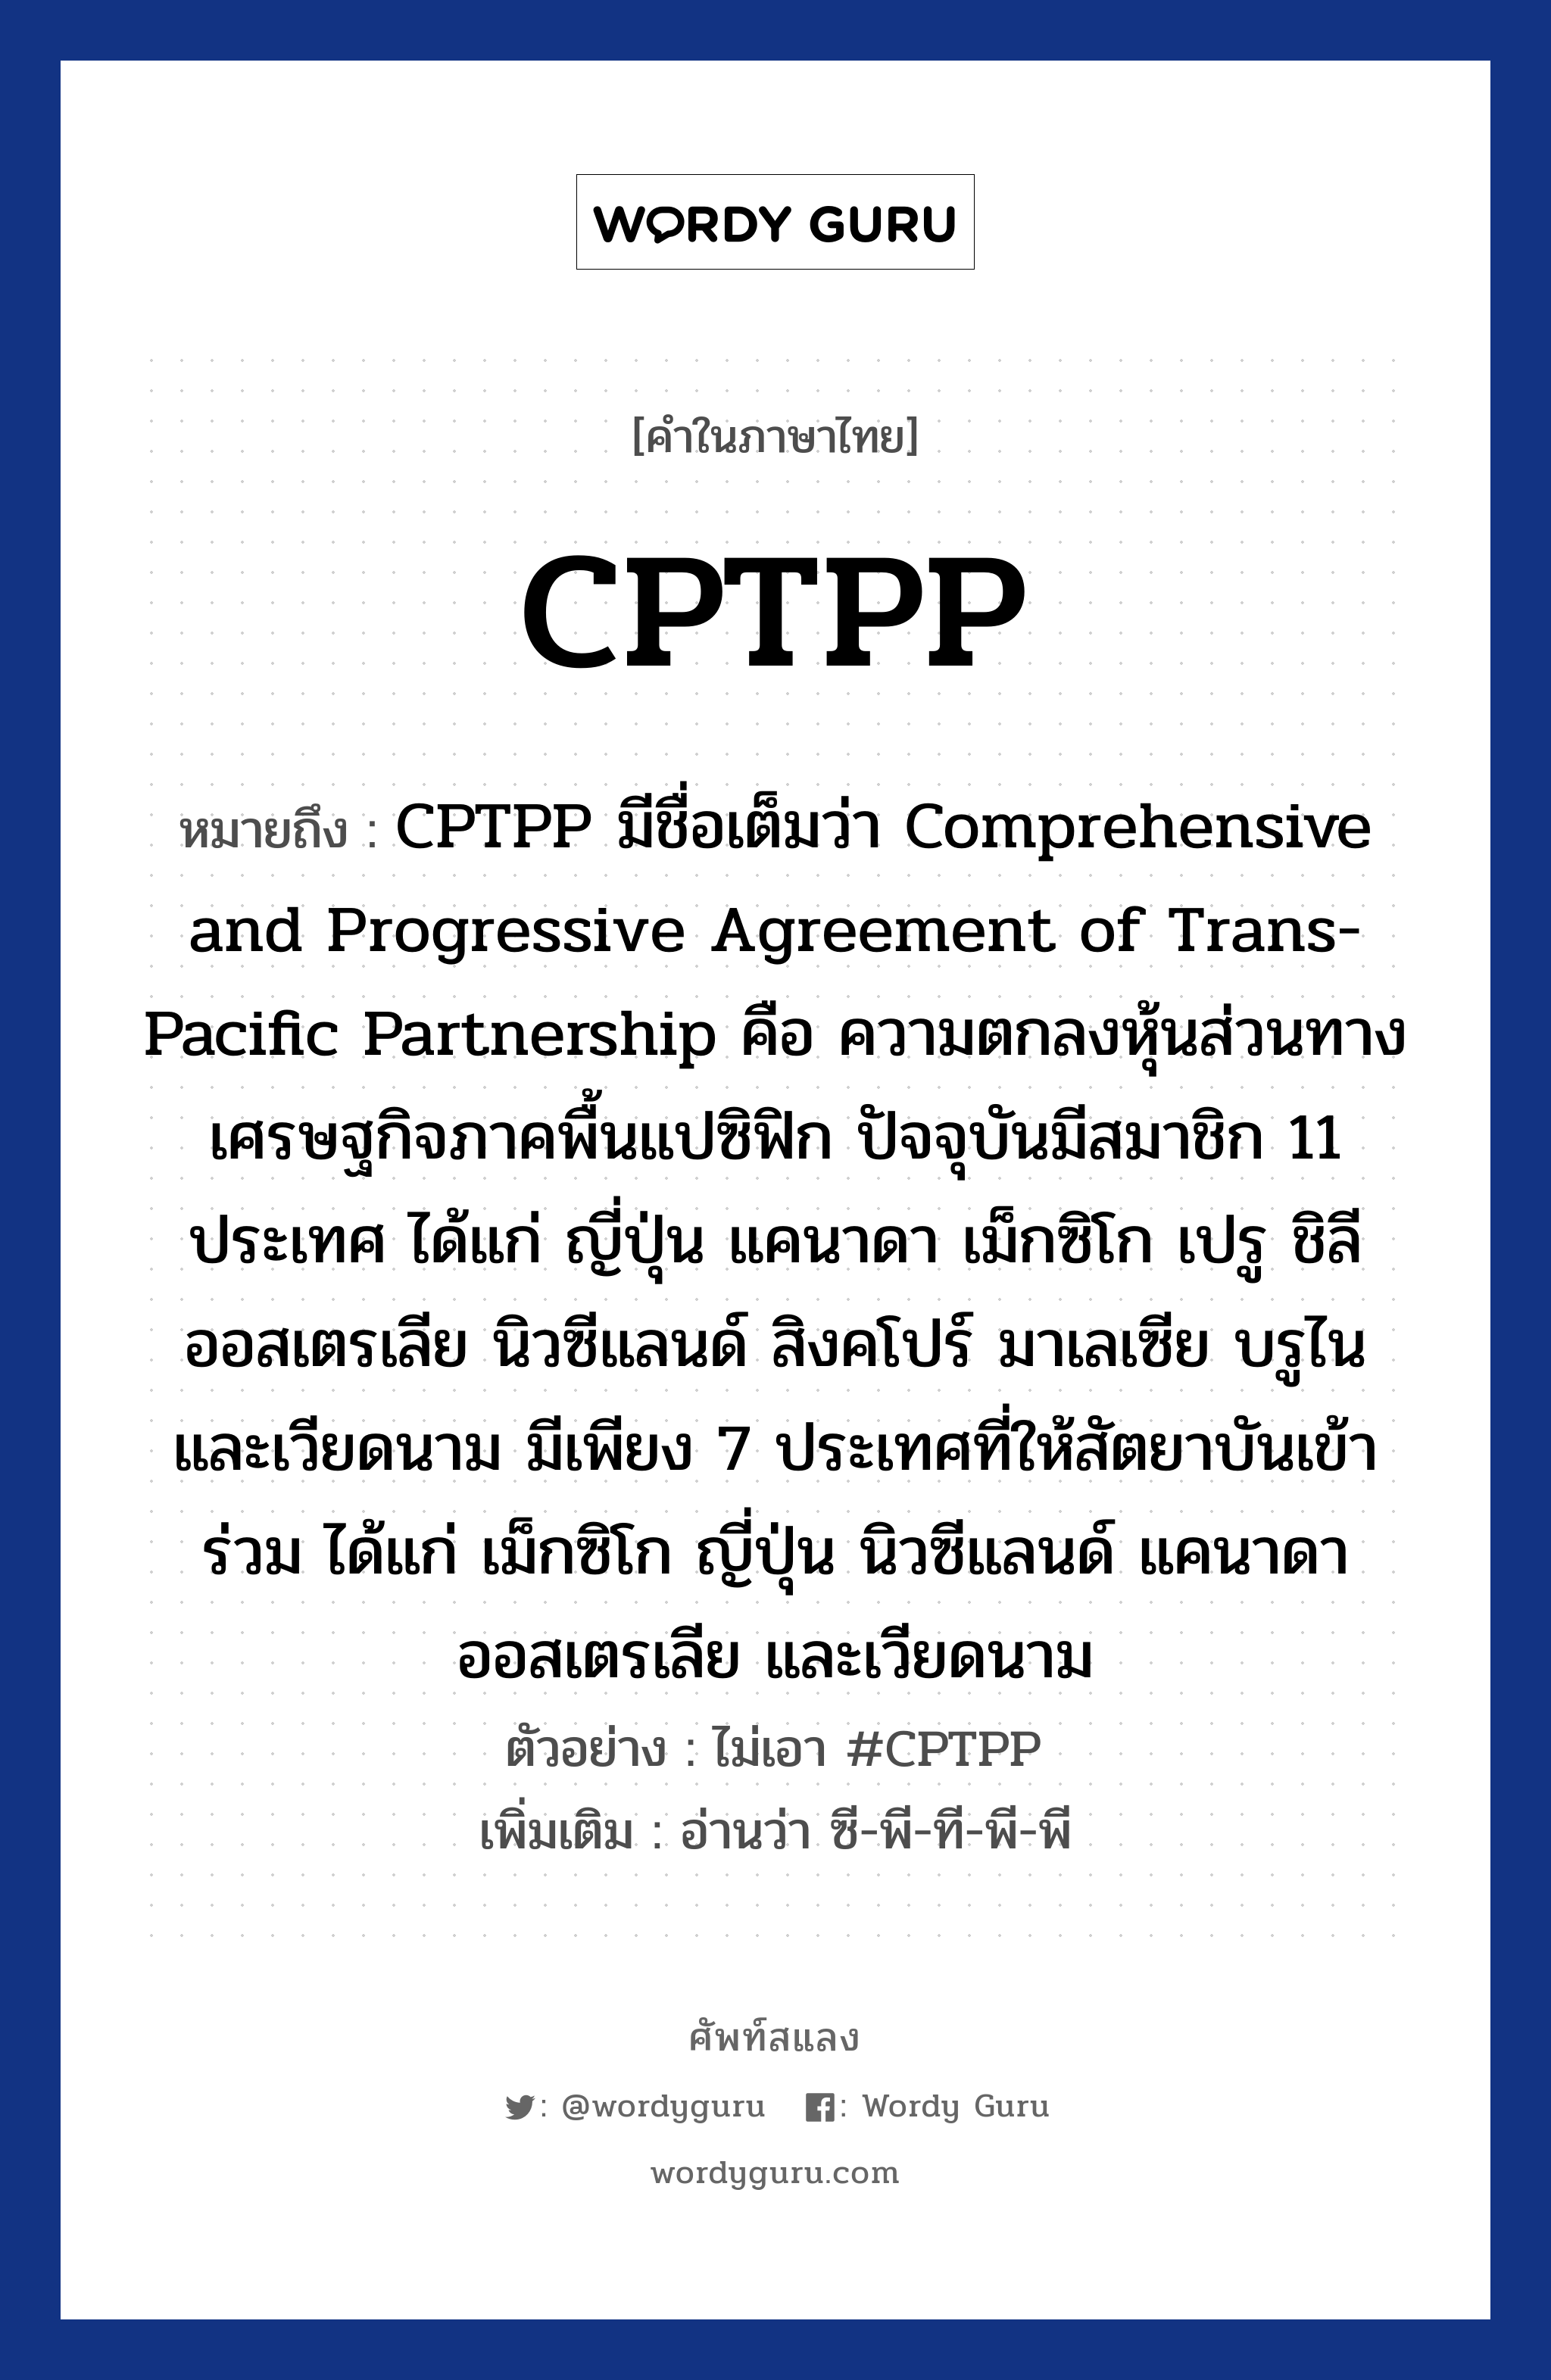 CPTPP หมายถึงอะไร?, คำไทย CPTPP คำในภาษาไทย CPTPP หมายถึง CPTPP มีชื่อเต็มว่า Comprehensive and Progressive Agreement of Trans-Pacific Partnership คือ ความตกลงหุ้นส่วนทางเศรษฐกิจภาคพื้นแปซิฟิก ปัจจุบันมีสมาชิก 11 ประเทศ ได้แก่ ญี่ปุ่น แคนาดา เม็กซิโก เปรู ชิลี ออสเตรเลีย นิวซีแลนด์ สิงคโปร์ มาเลเซีย บรูไน และเวียดนาม มีเพียง 7 ประเทศที่ให้สัตยาบันเข้าร่วม ได้แก่ เม็กซิโก ญี่ปุ่น นิวซีแลนด์ แคนาดา ออสเตรเลีย และเวียดนาม ตัวอย่าง ไม่เอา #CPTPP เพิ่มเติม อ่านว่า ซี-พี-ที-พี-พี